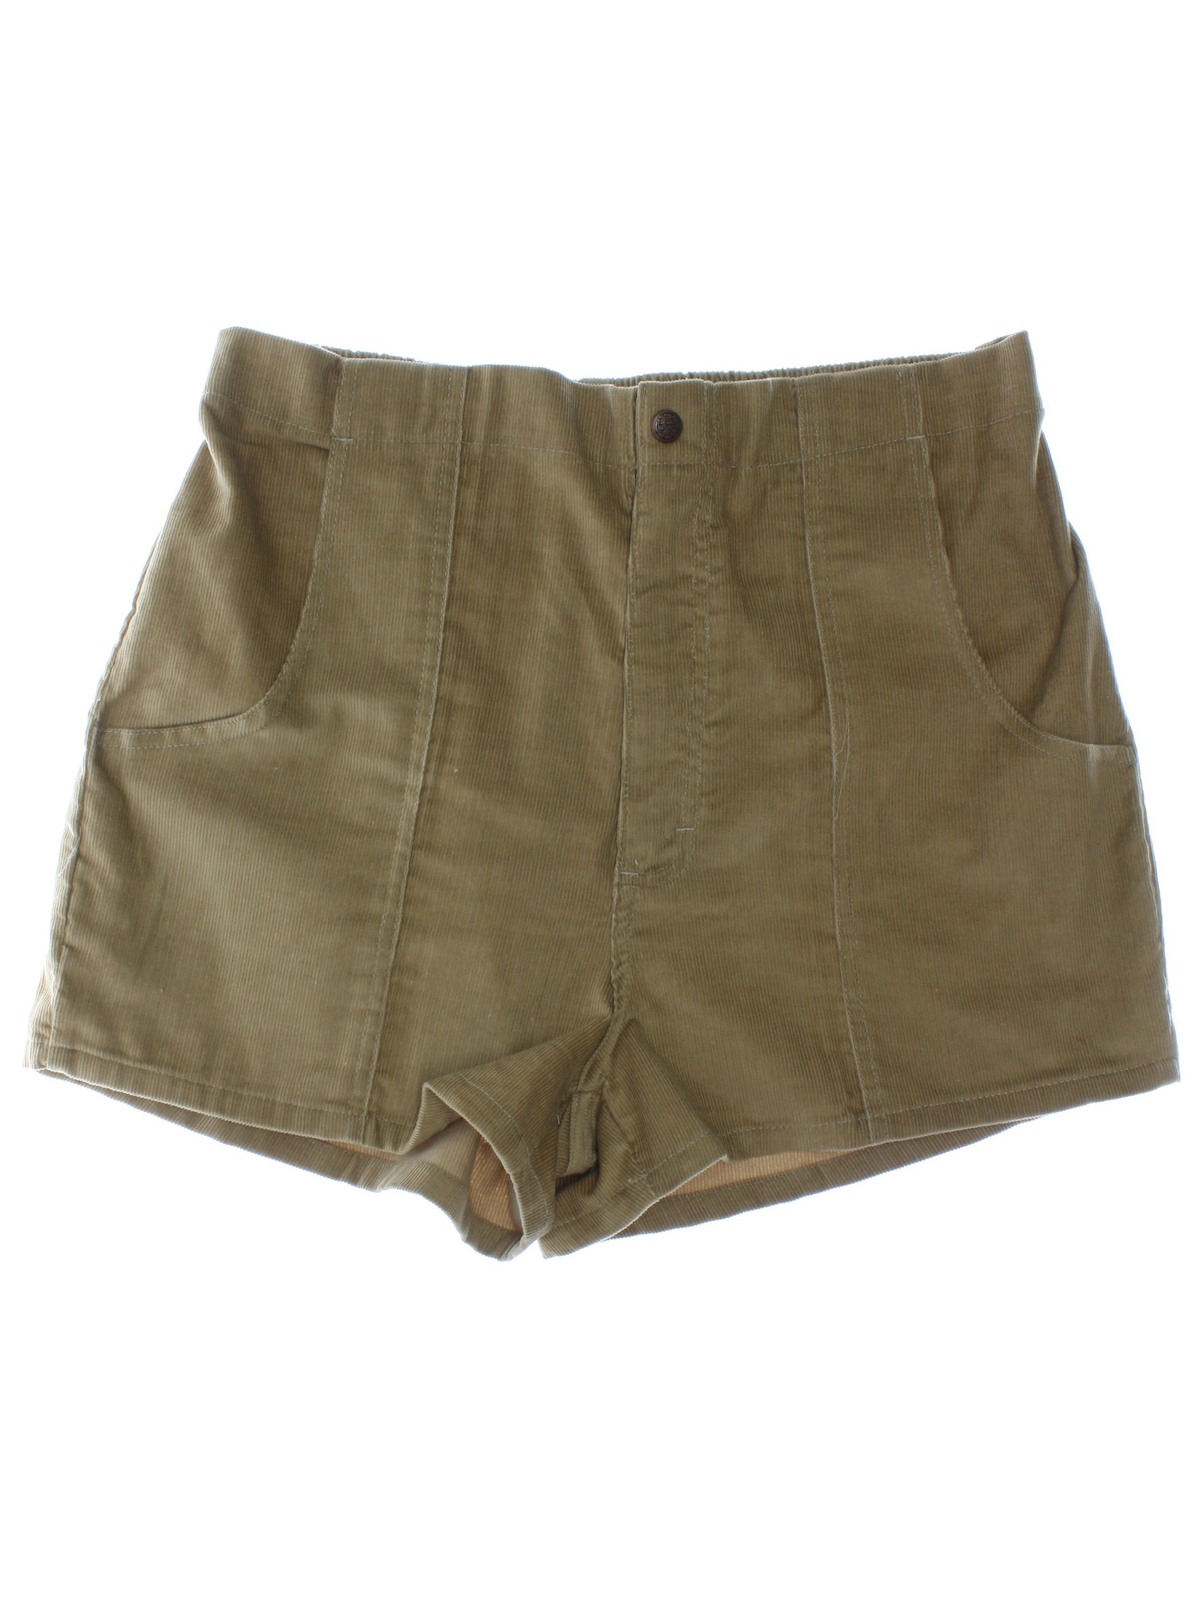 Retro 80's Shorts: 80s -Sears- Mens tan background medium wale cotton ...